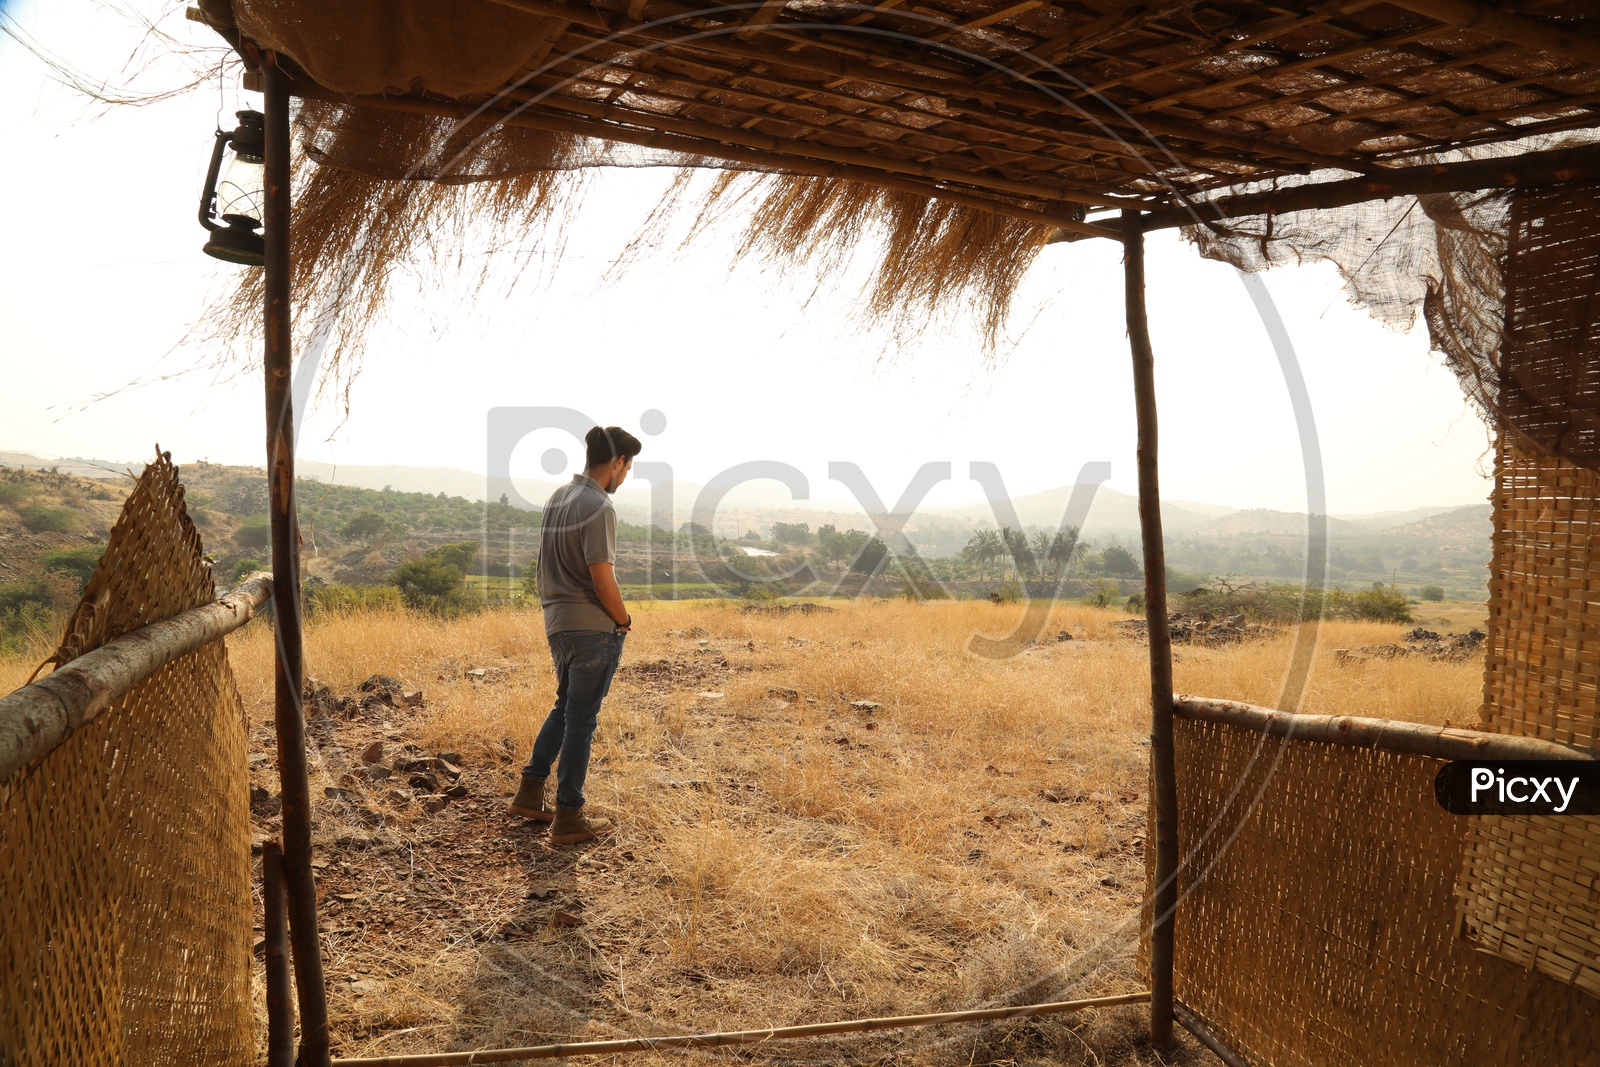 A man seen through the nipa hut in the open area